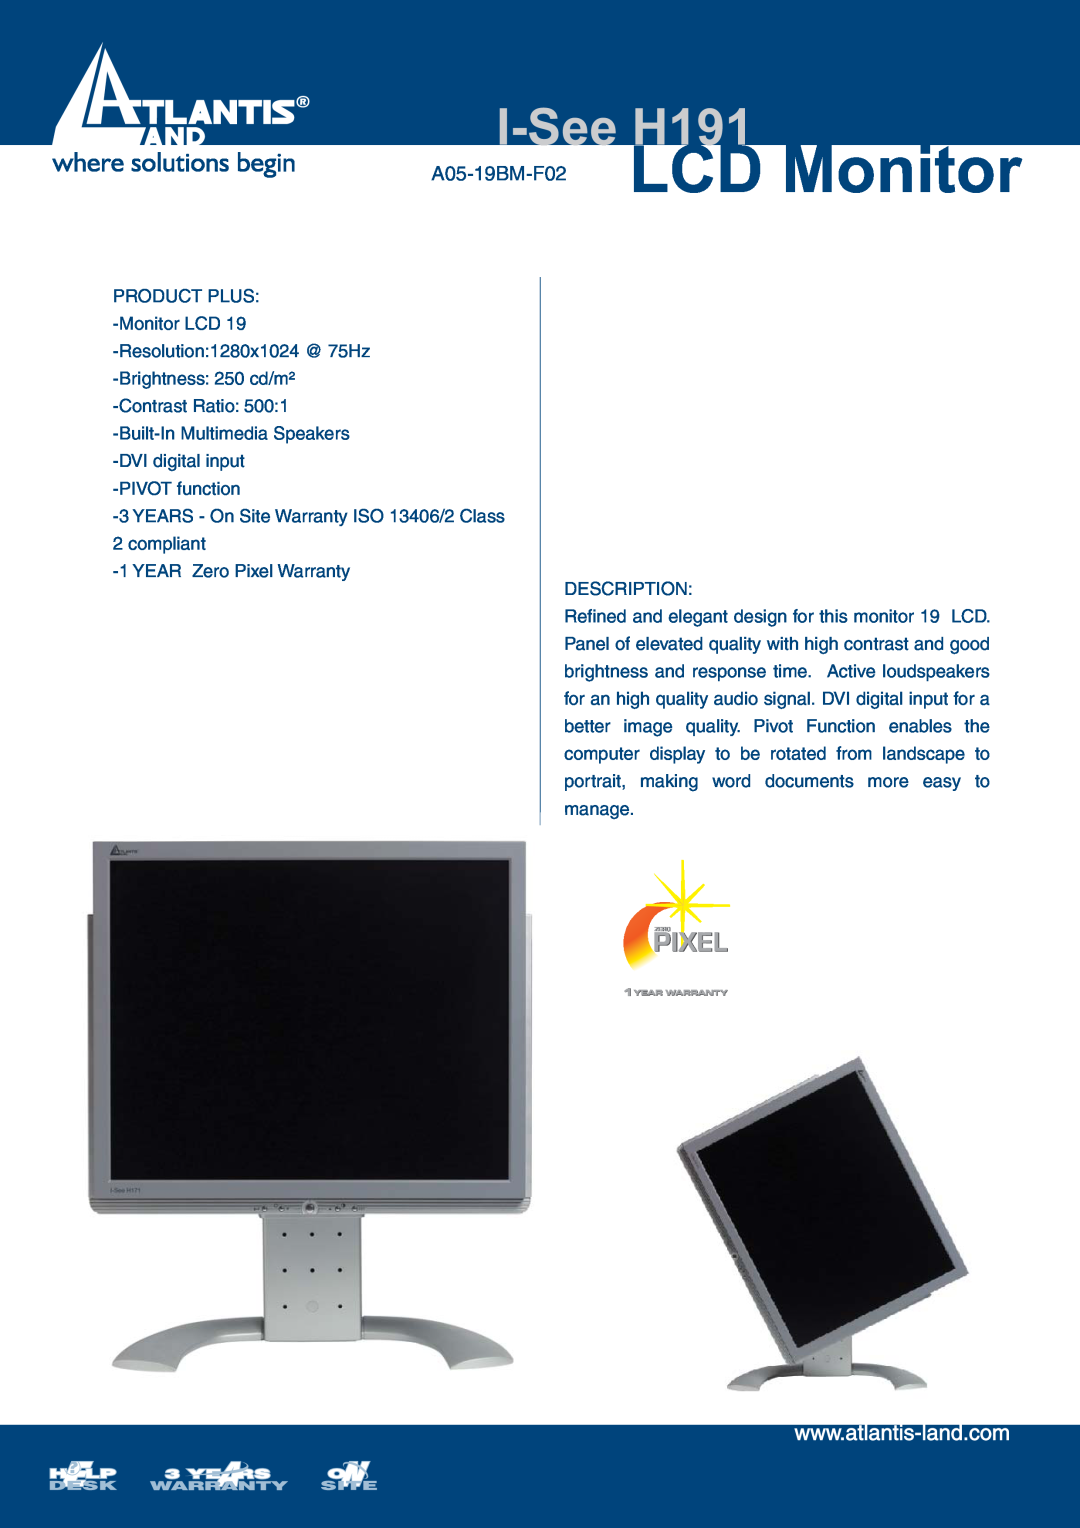 Atlantis Land warranty I-See H191, A05-19BM-F02 LCD Monitor 